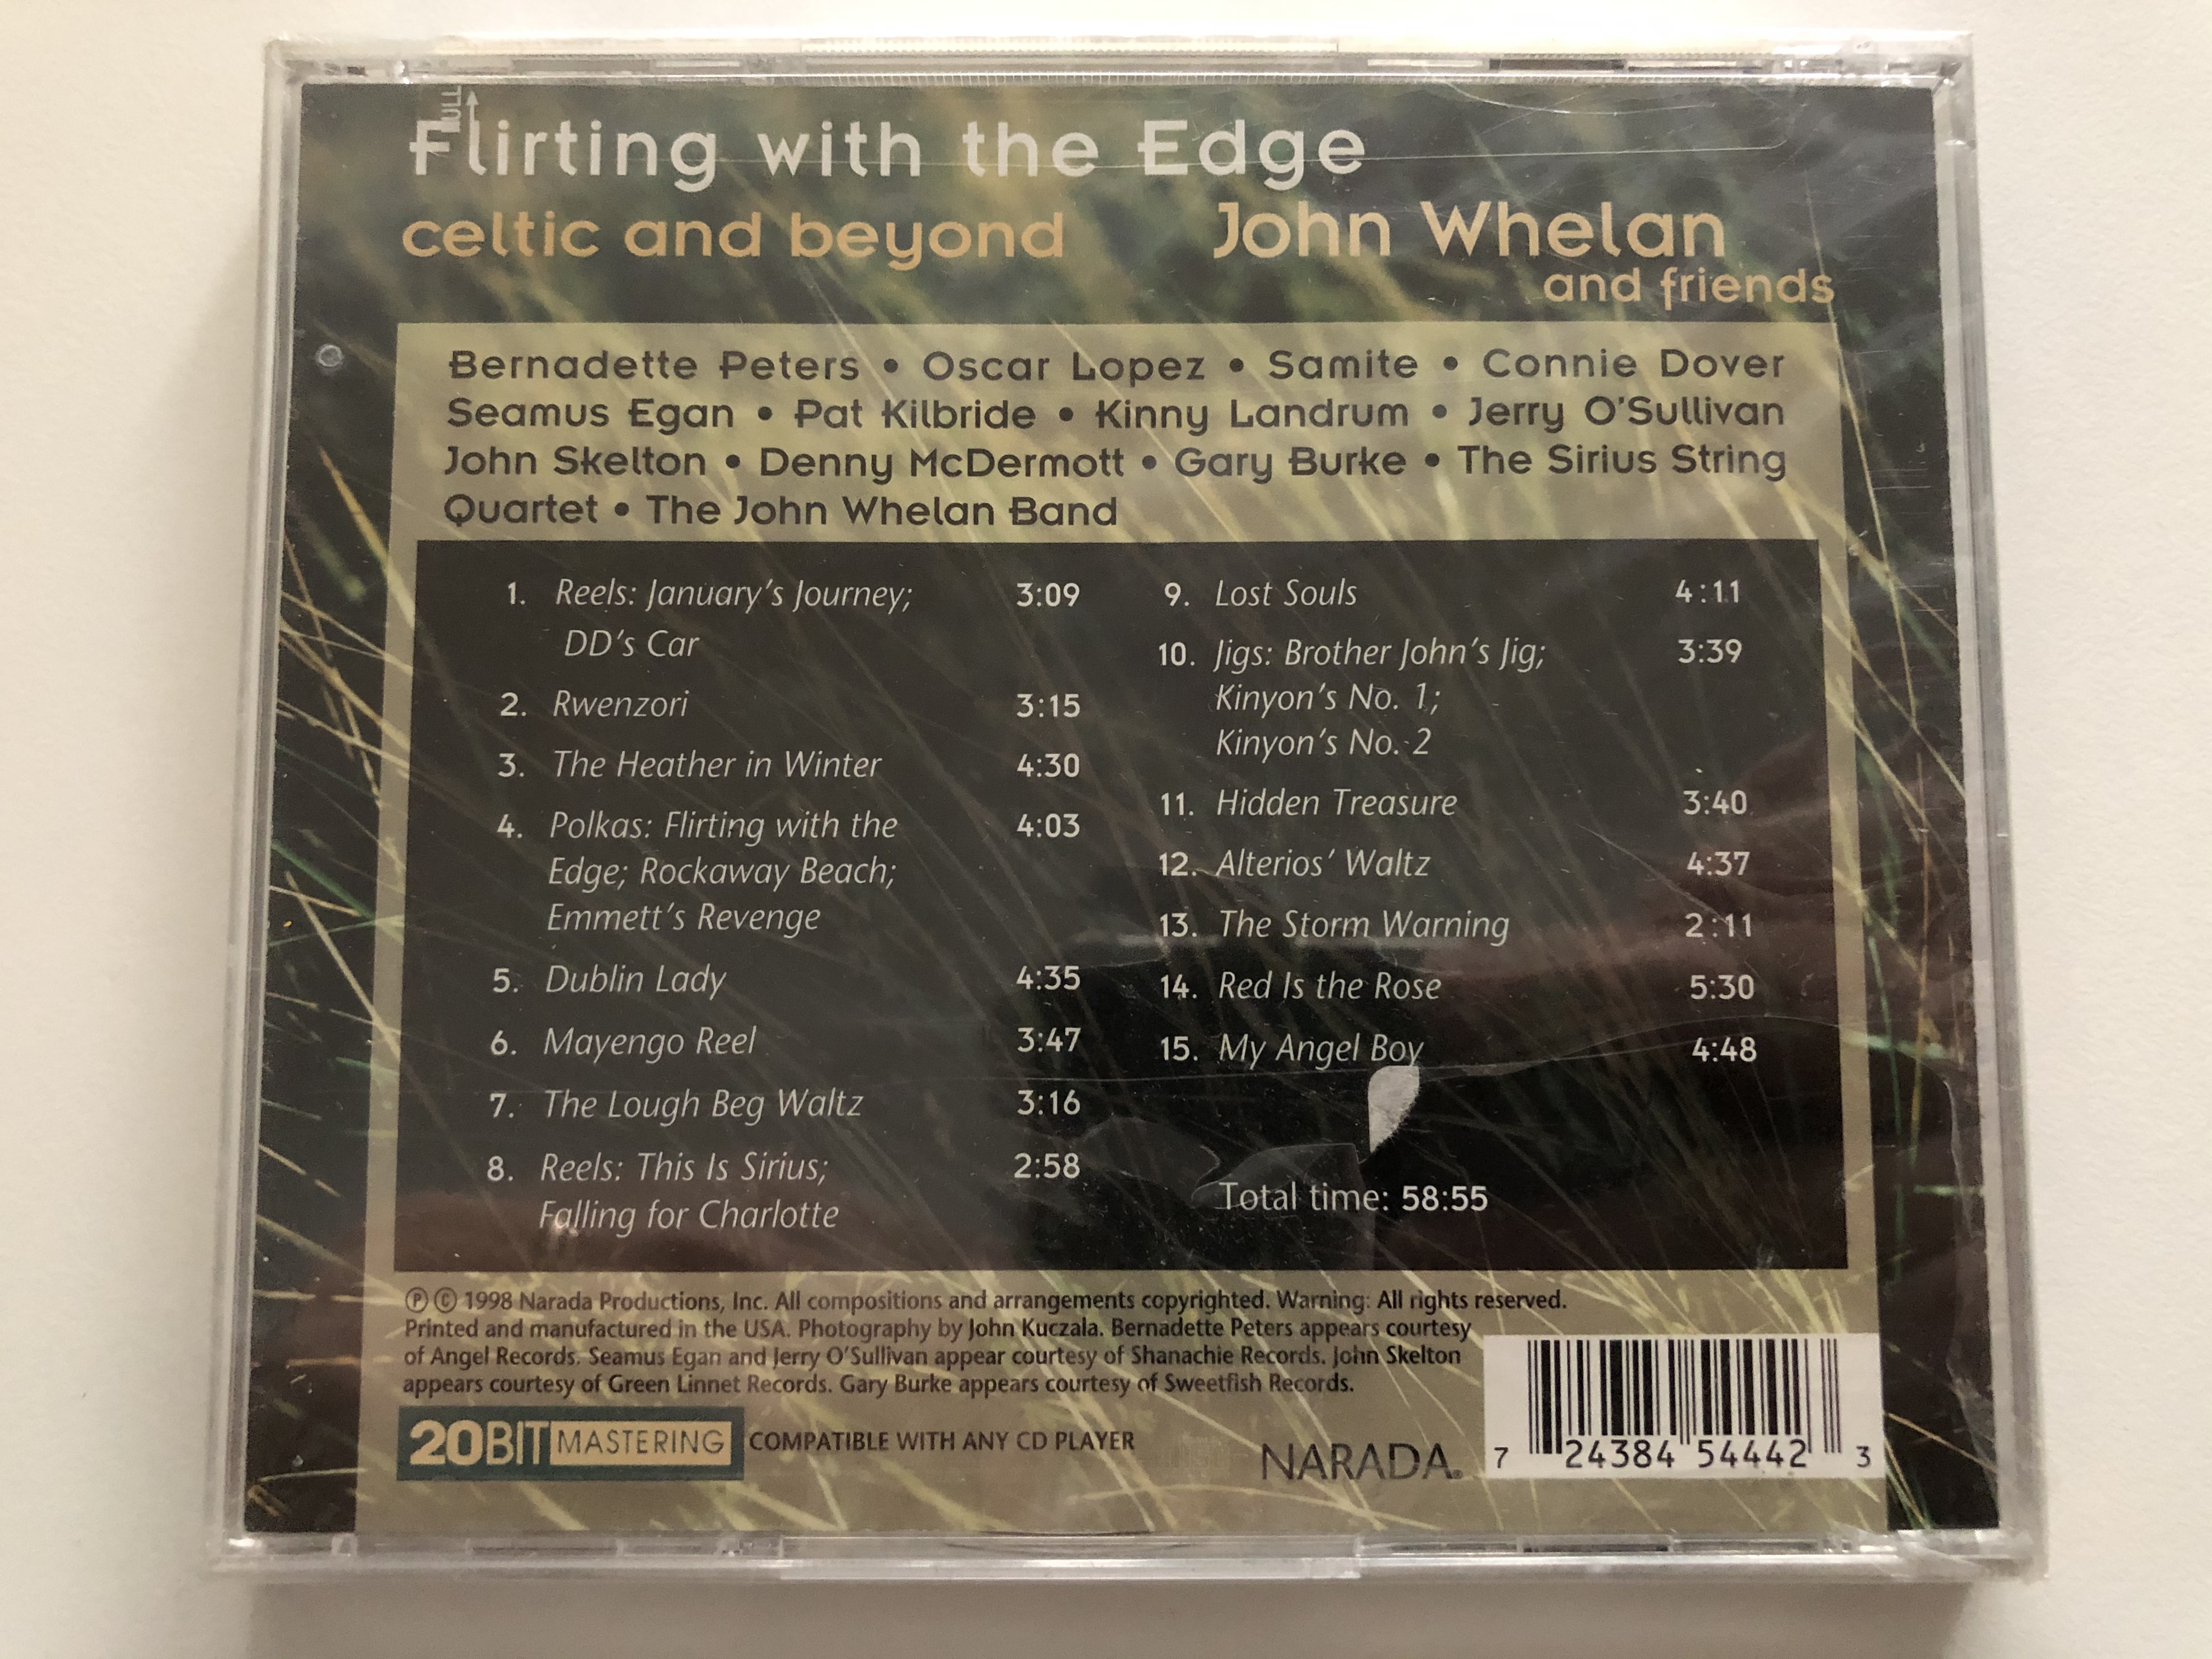 flirting-with-the-edge-john-whelan-and-friends-featuring-bernadette-peters-singing-dublin-lady-narada-audio-cd-1998-72438-45444-2-3-2-.jpg